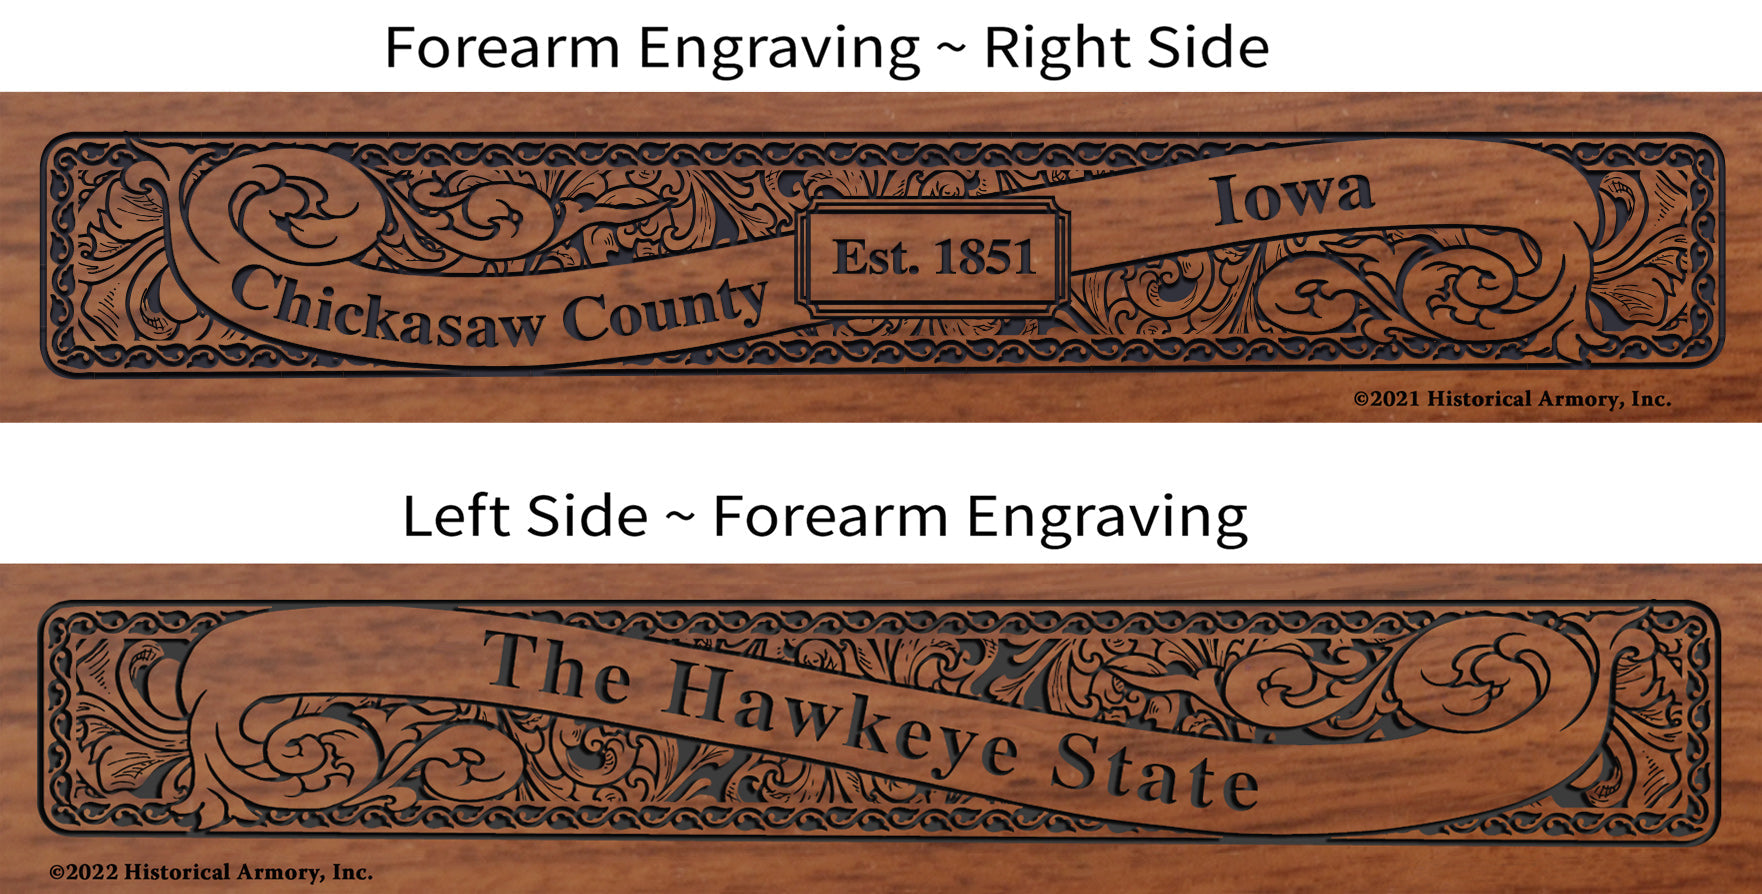 Chickasaw County Iowa Engraved Rifle Forearm